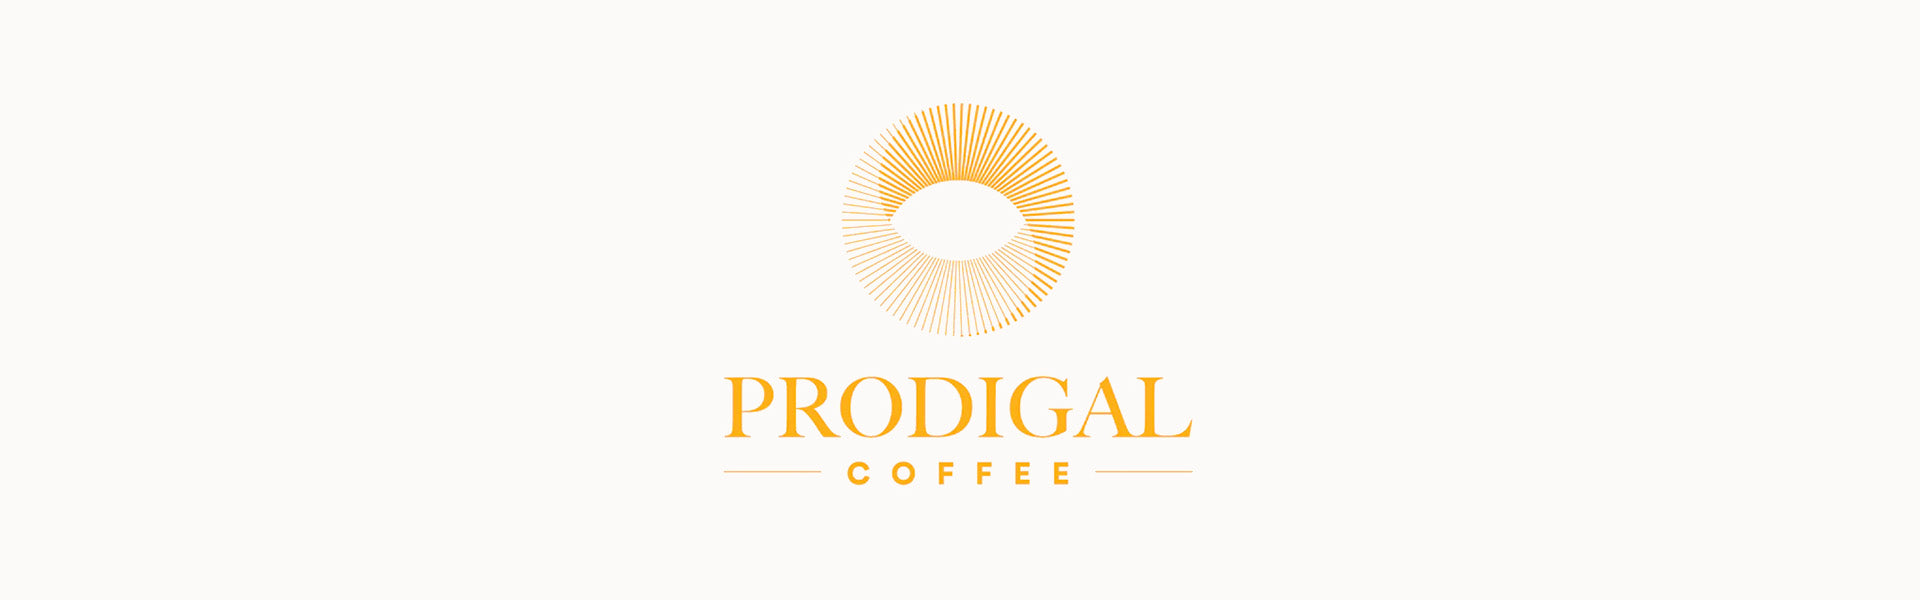 Logo der Marke Prodigal Coffee